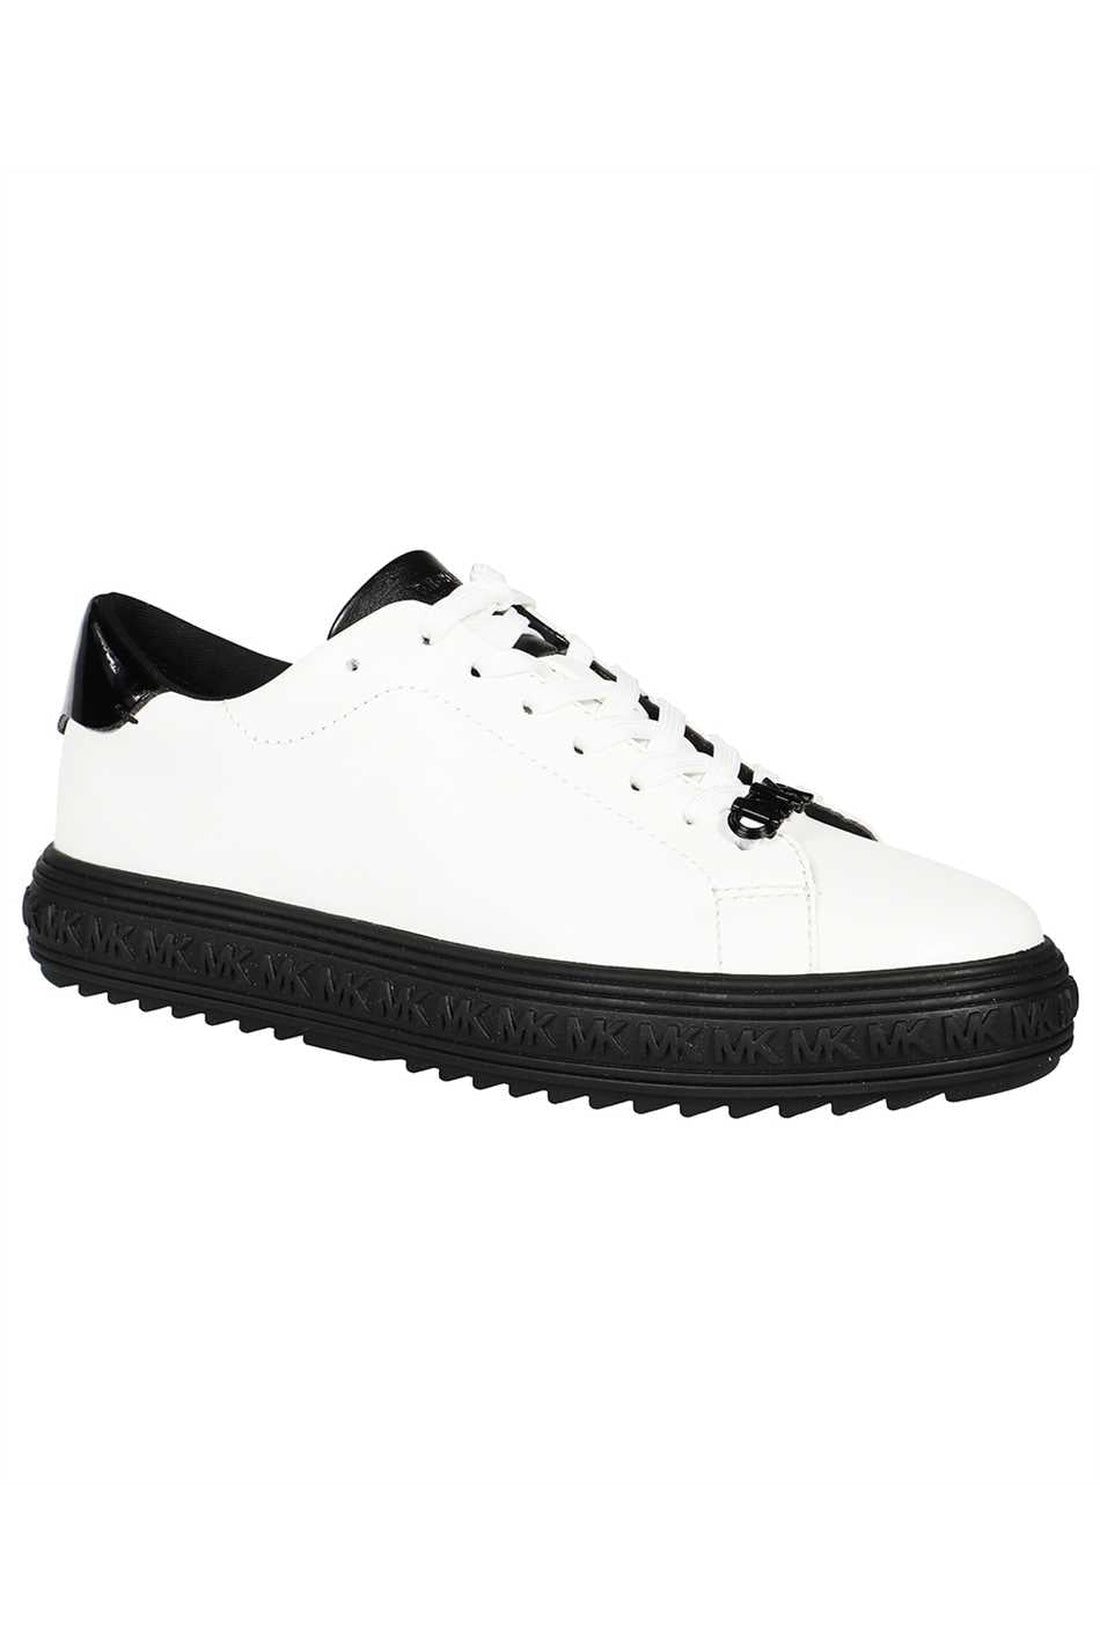 MICHAEL MICHAEL KORS-OUTLET-SALE-Leather low-top sneakers-ARCHIVIST